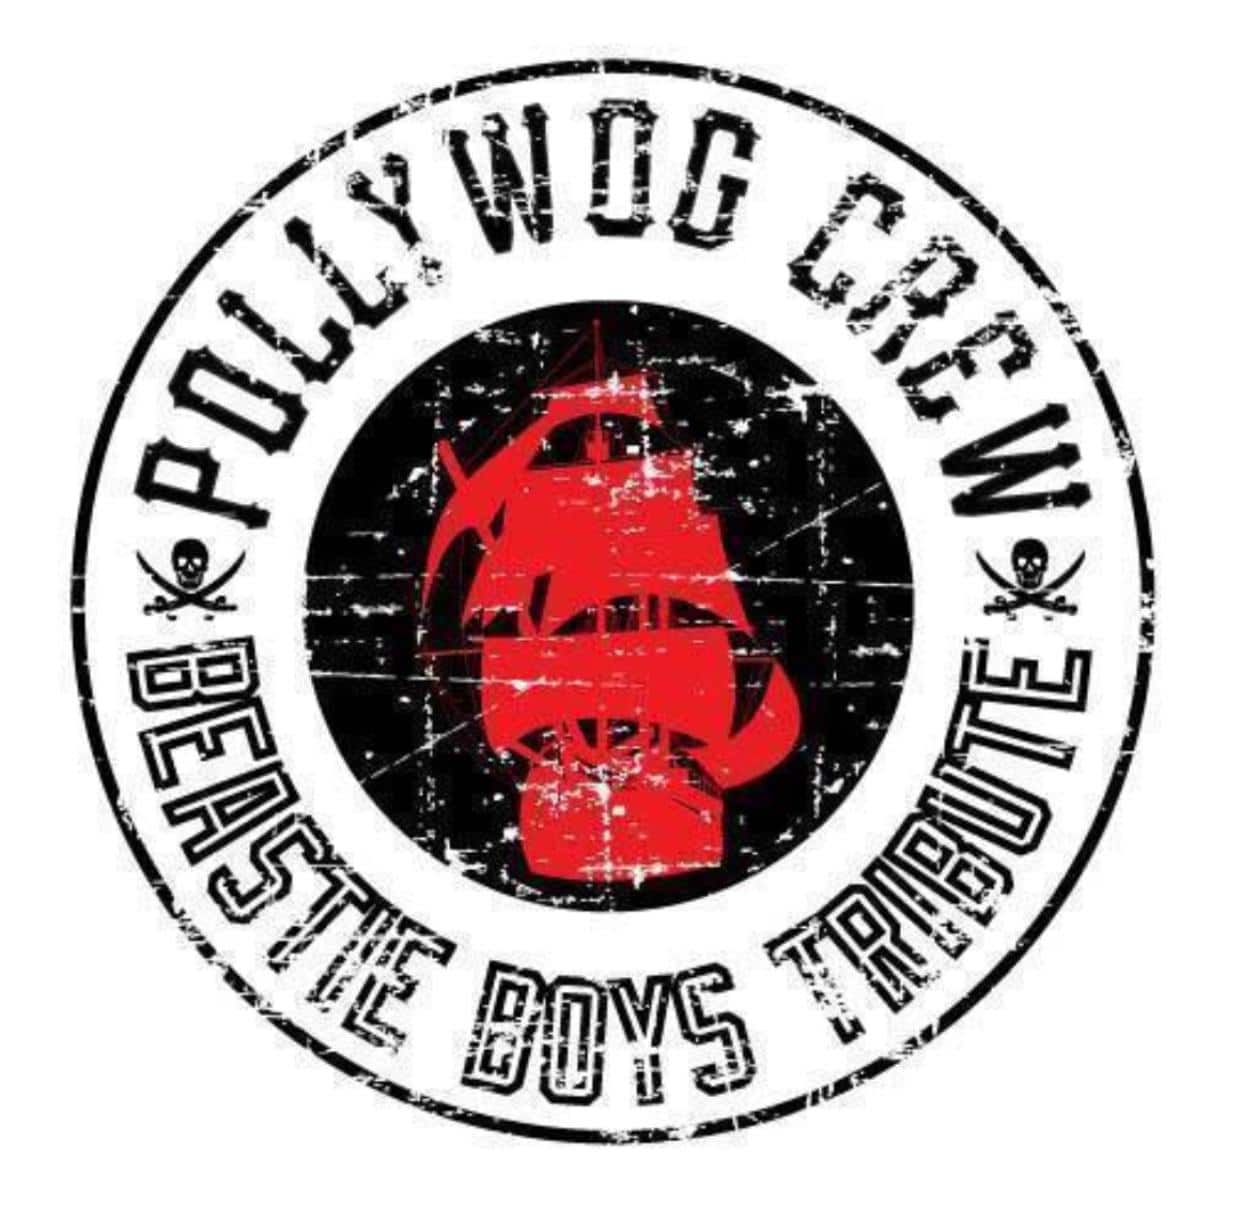 Beastie Boys Tribute by Pollywog Crew